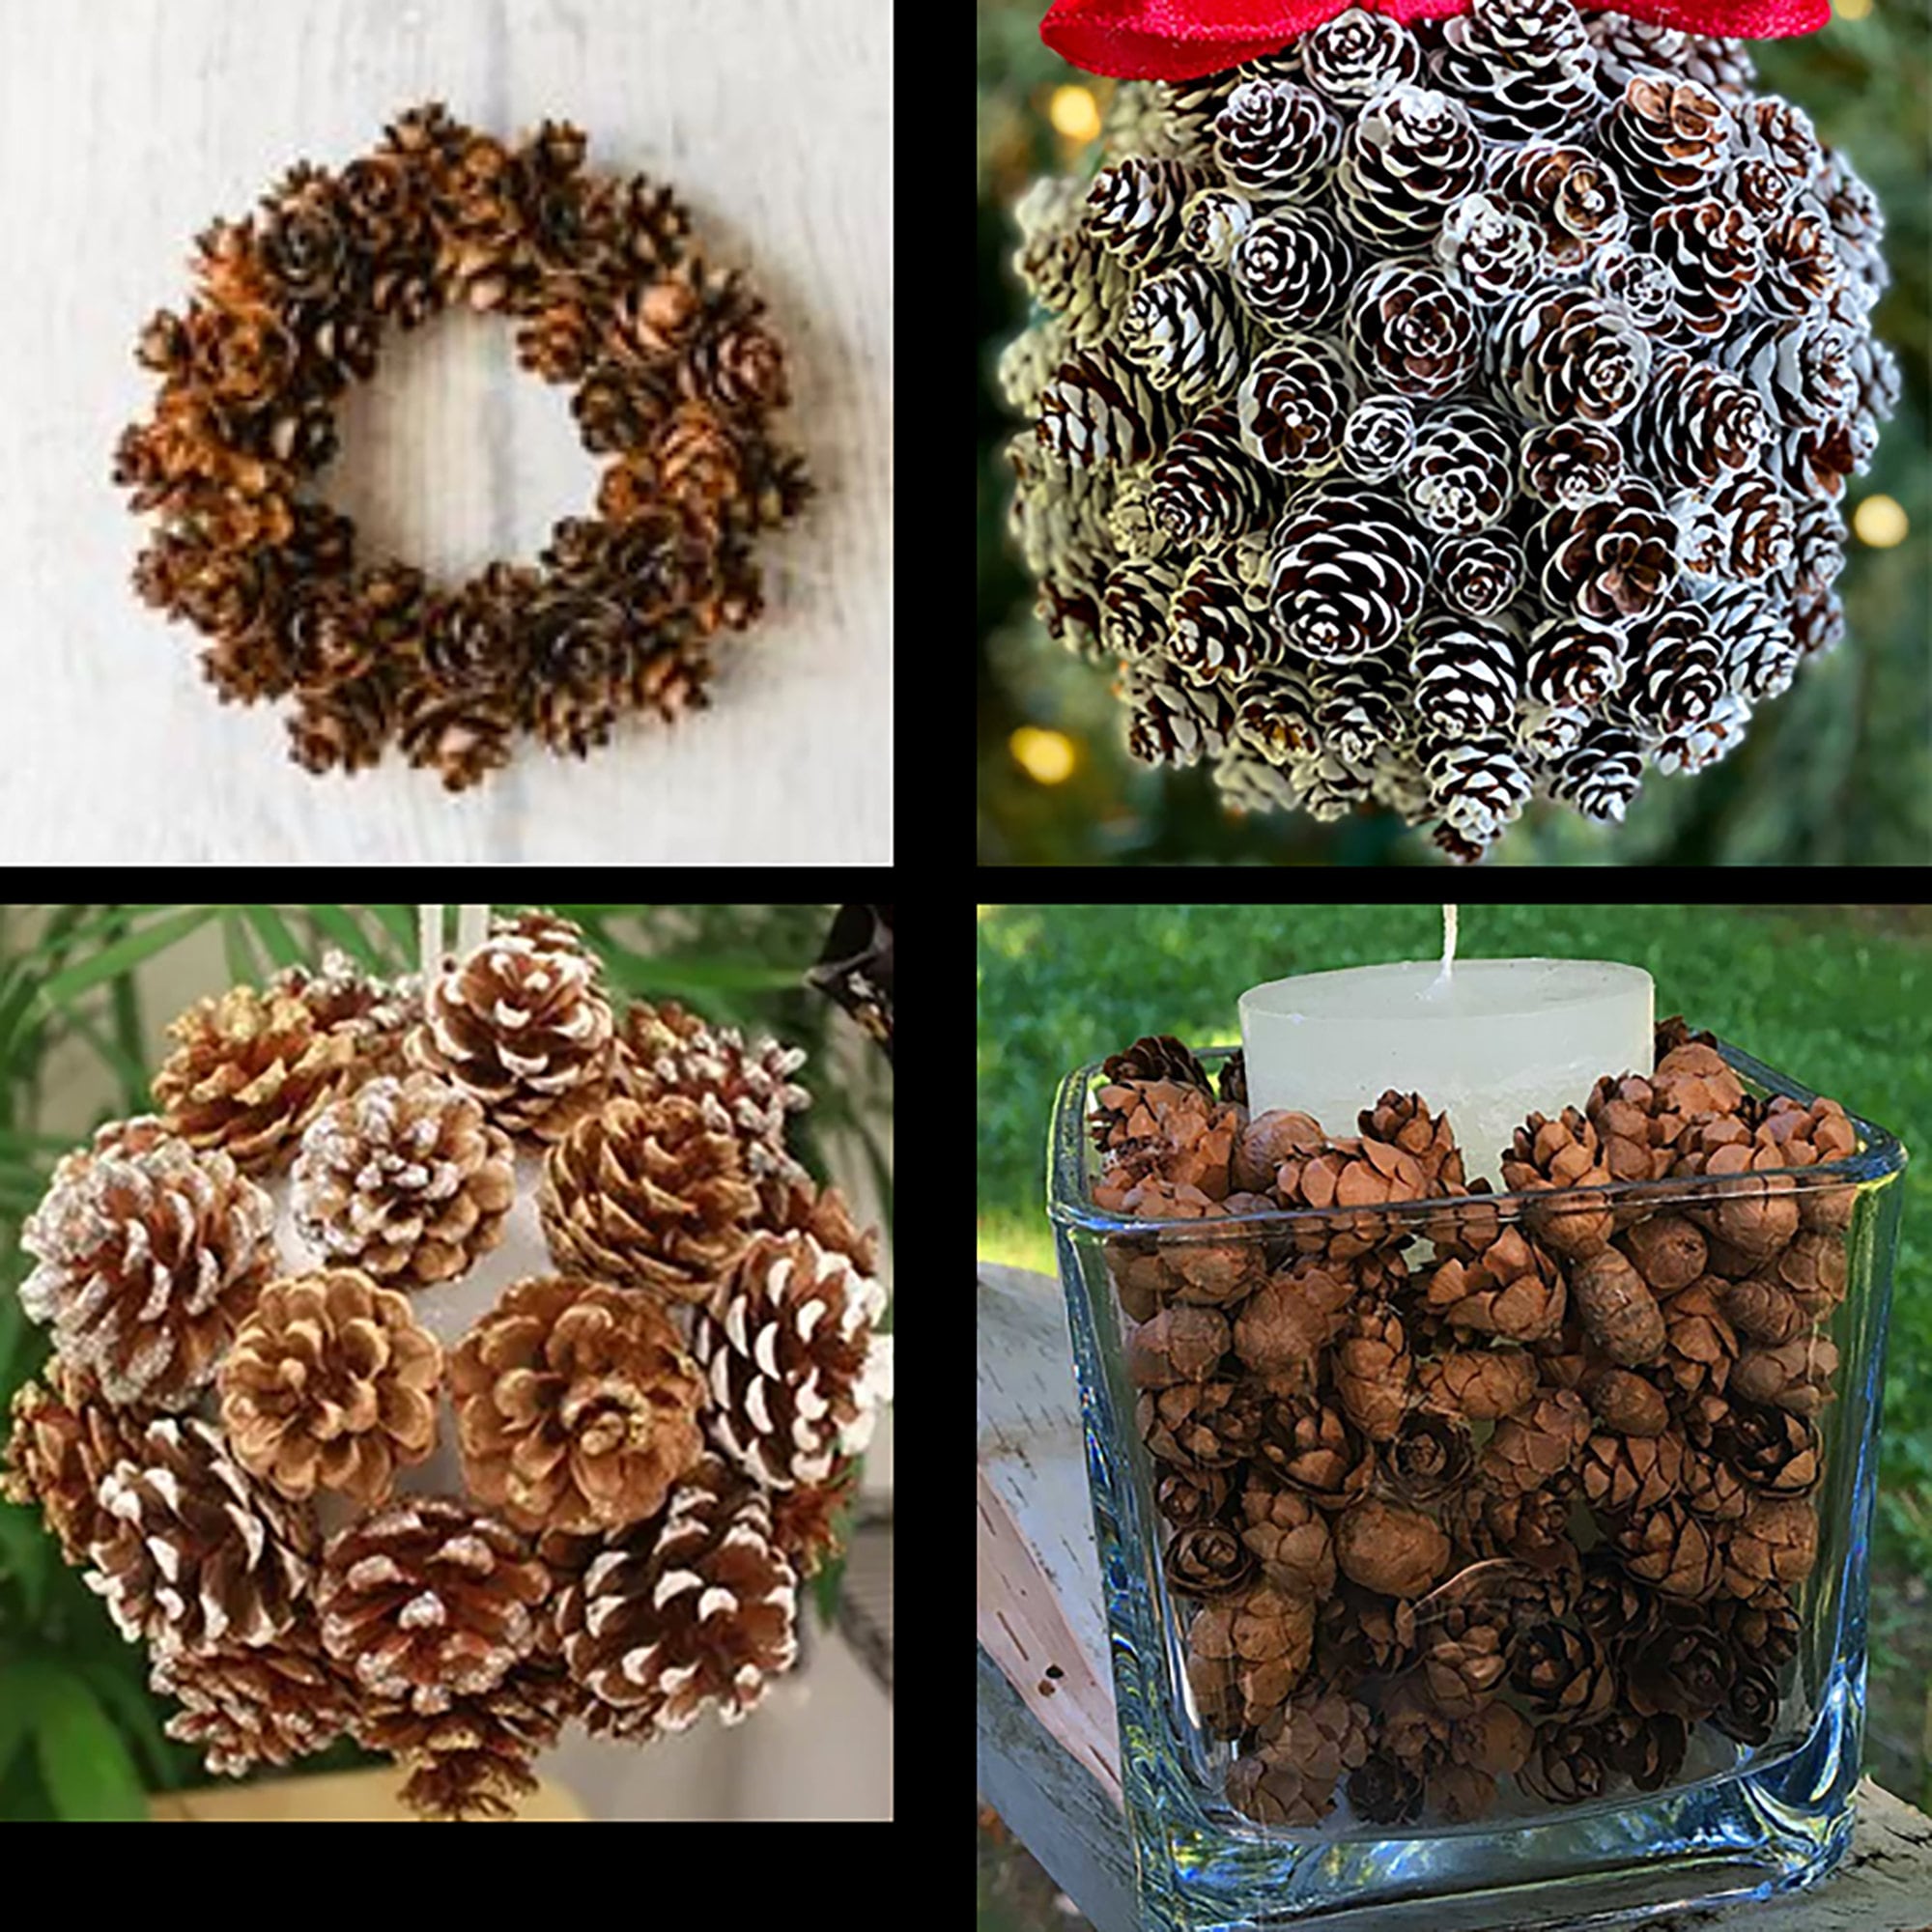 75 Mini Pine Cones - Tamarack - NW Montana -- 1-2..5 - Wreath Crafting